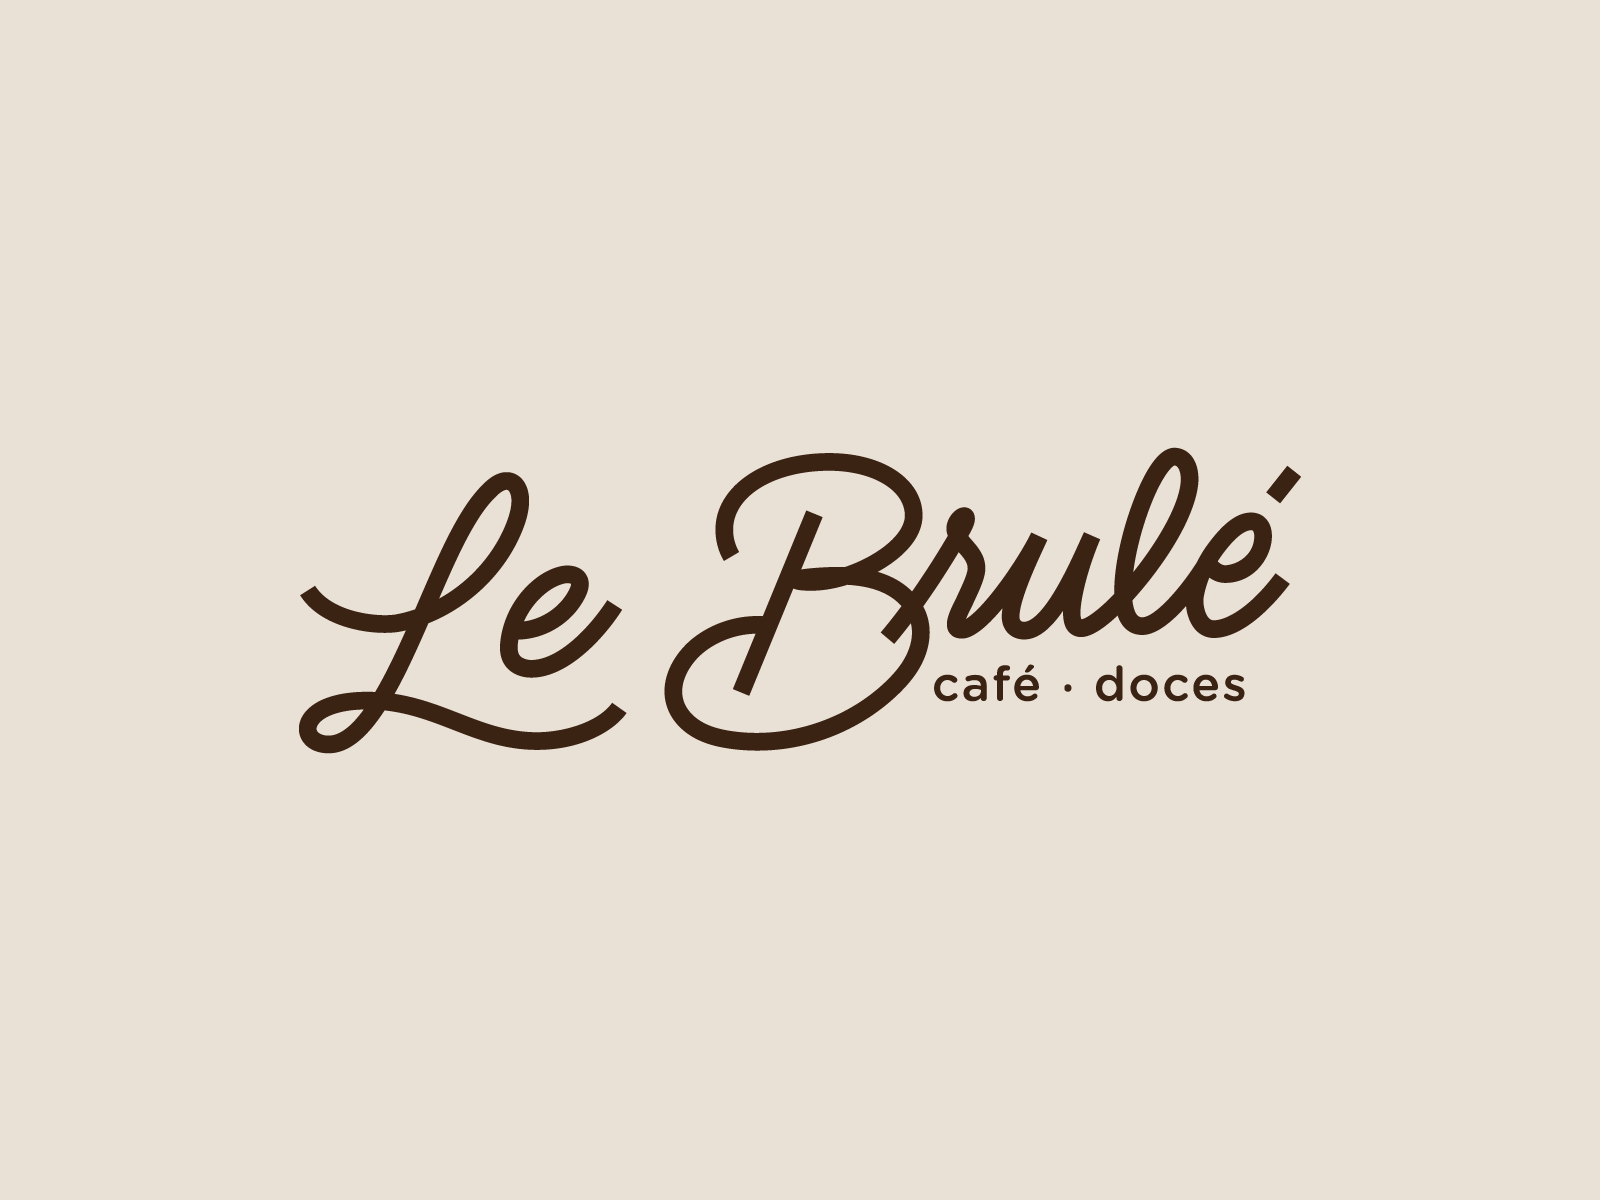 Le Brulé - logo design by Lano Studio / Alanddney on Dribbble